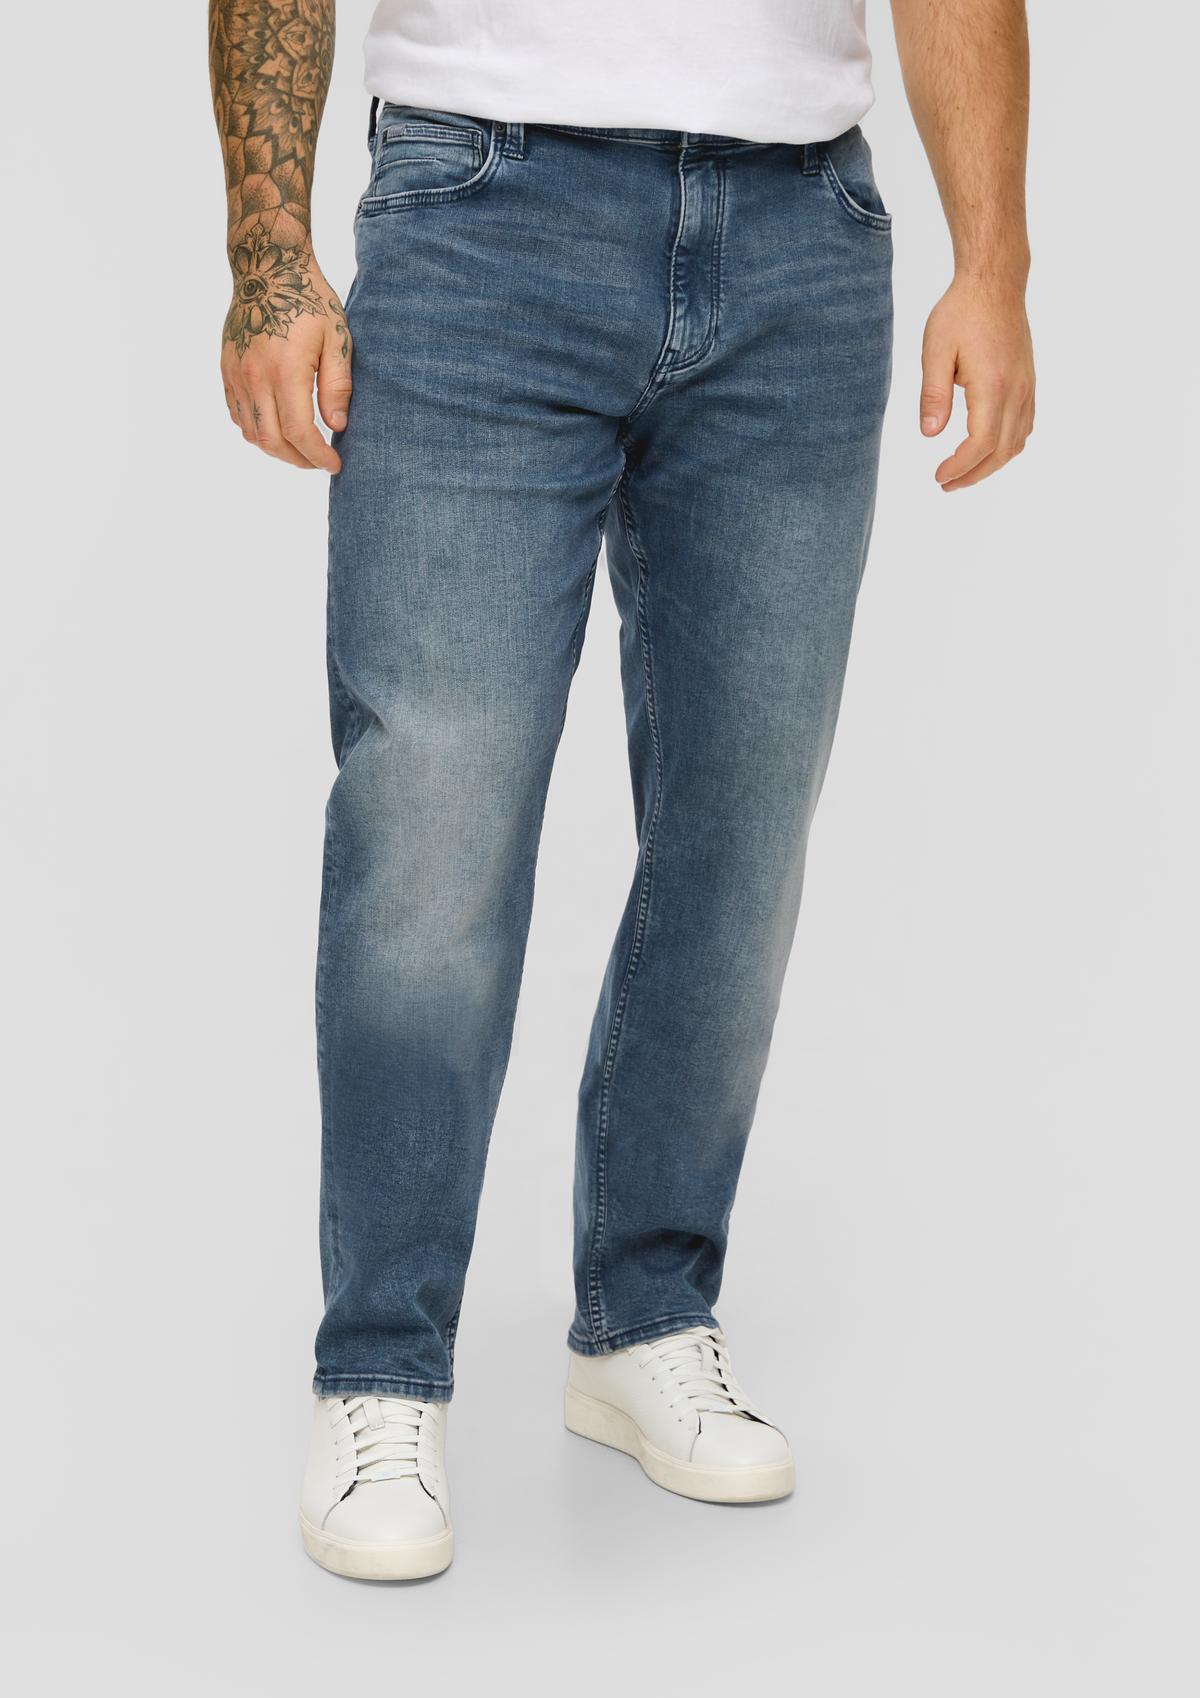 rise York jeans mid / / leg fit regular - blue regular /